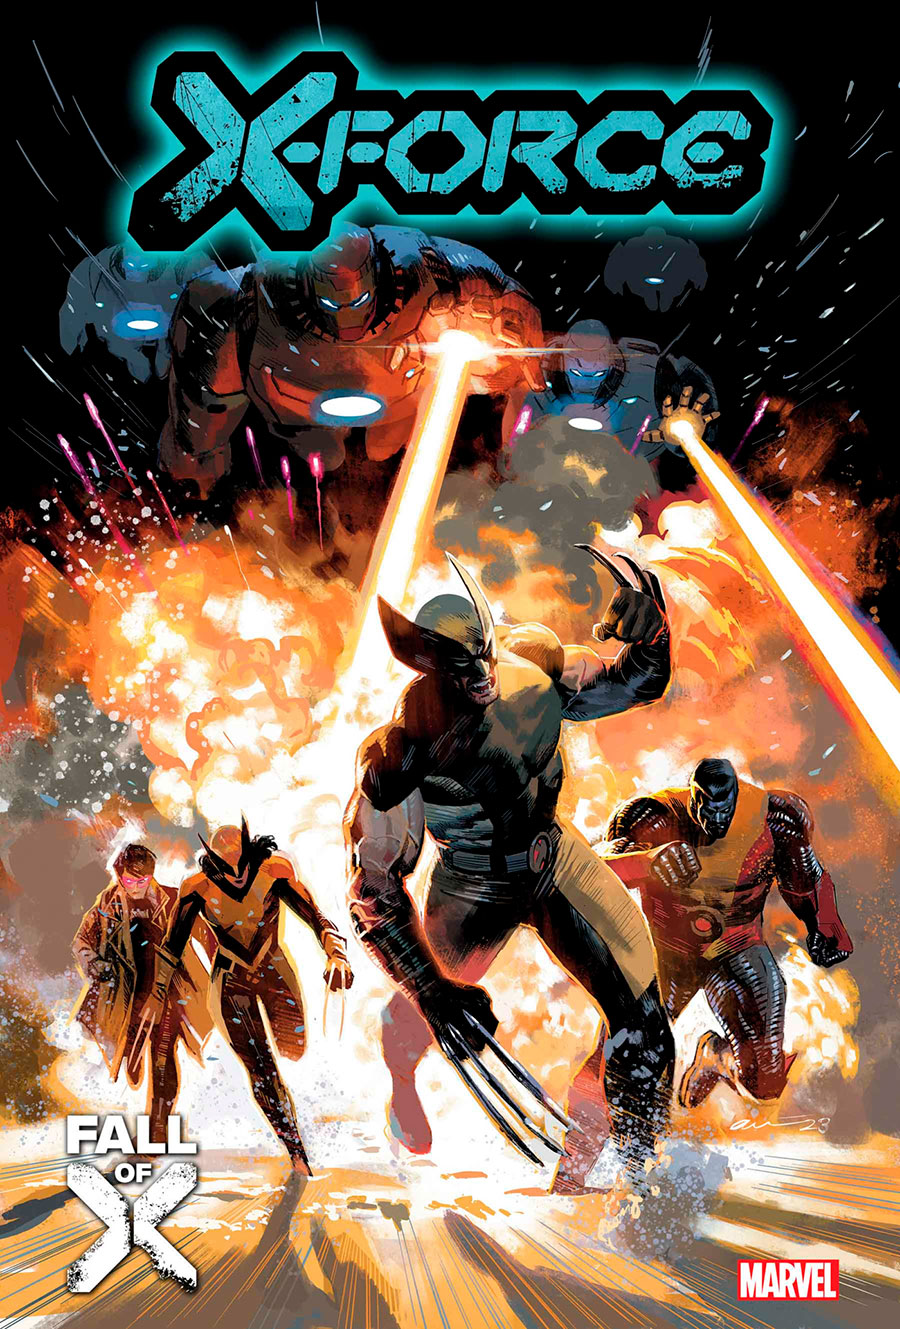 X-Force Vol 6 #47 Cover A Regular Daniel Acuna Cover (Fall Of X Tie-In)